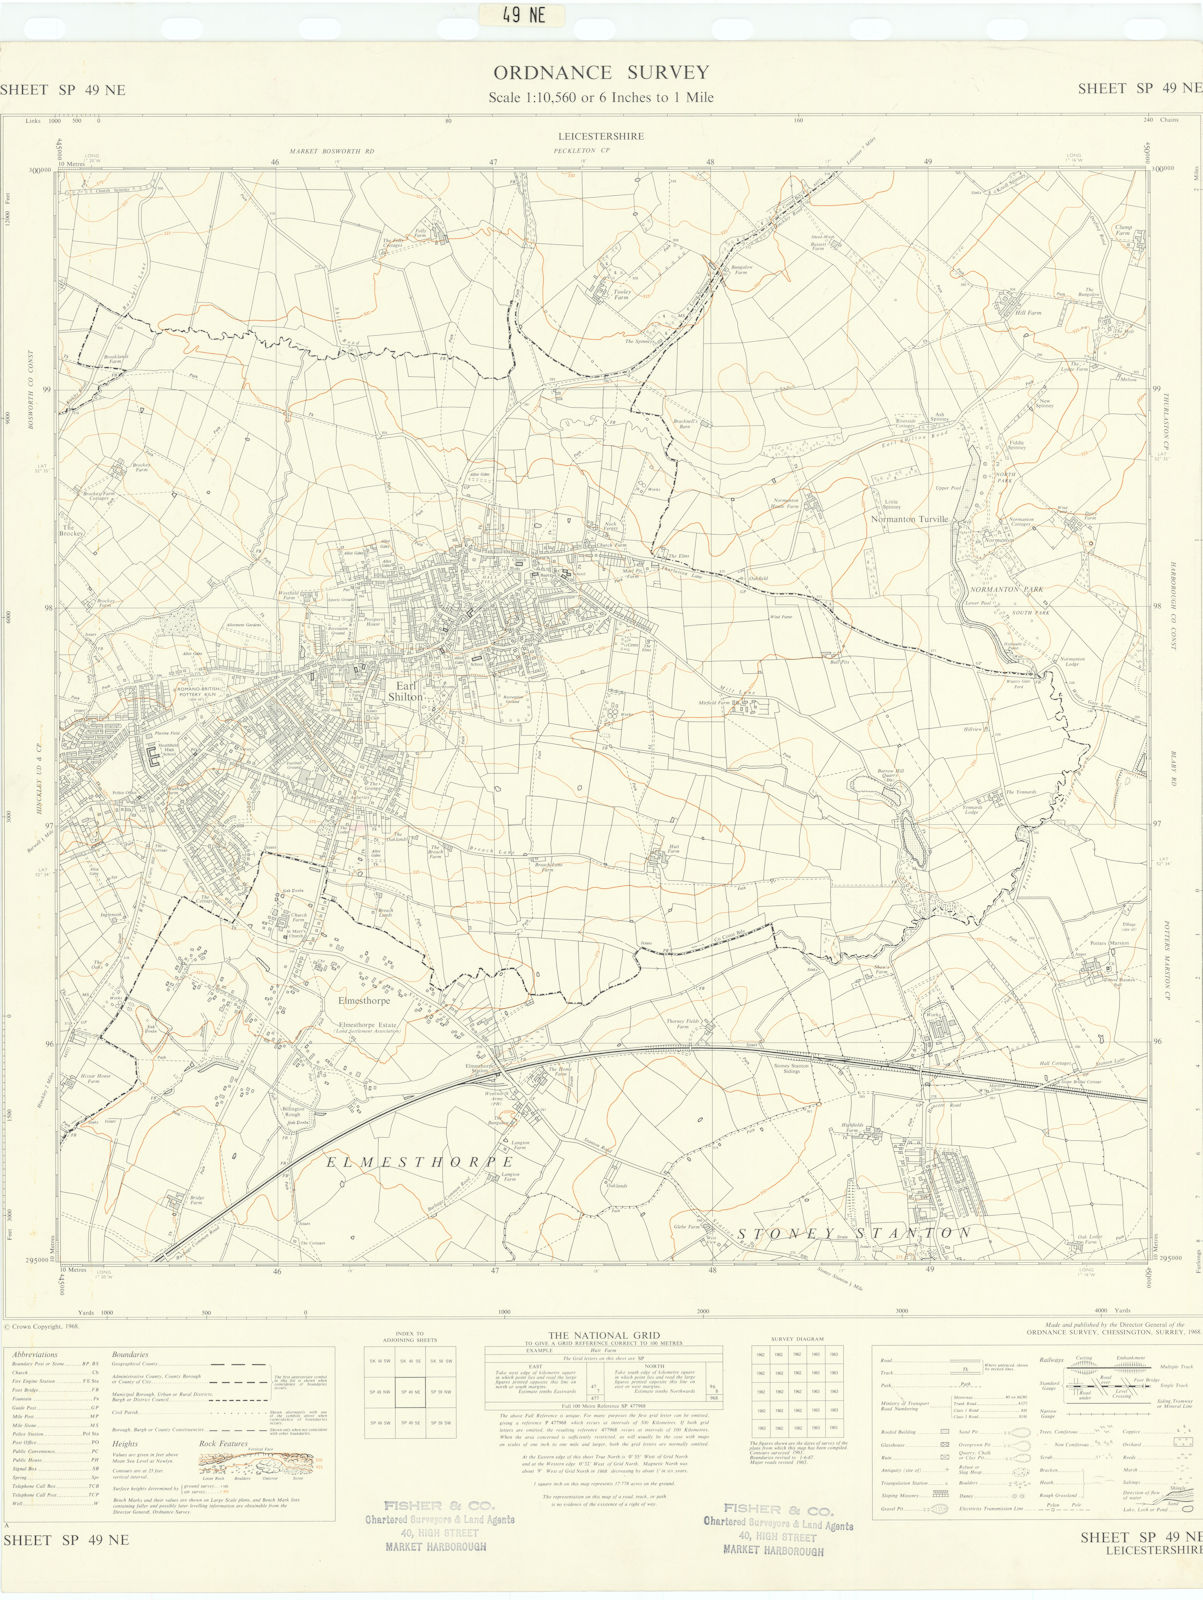 Ordnance Survey SP49NE Leics Earl Shilton Elmesthorpe Stoney Stanton 1968 map